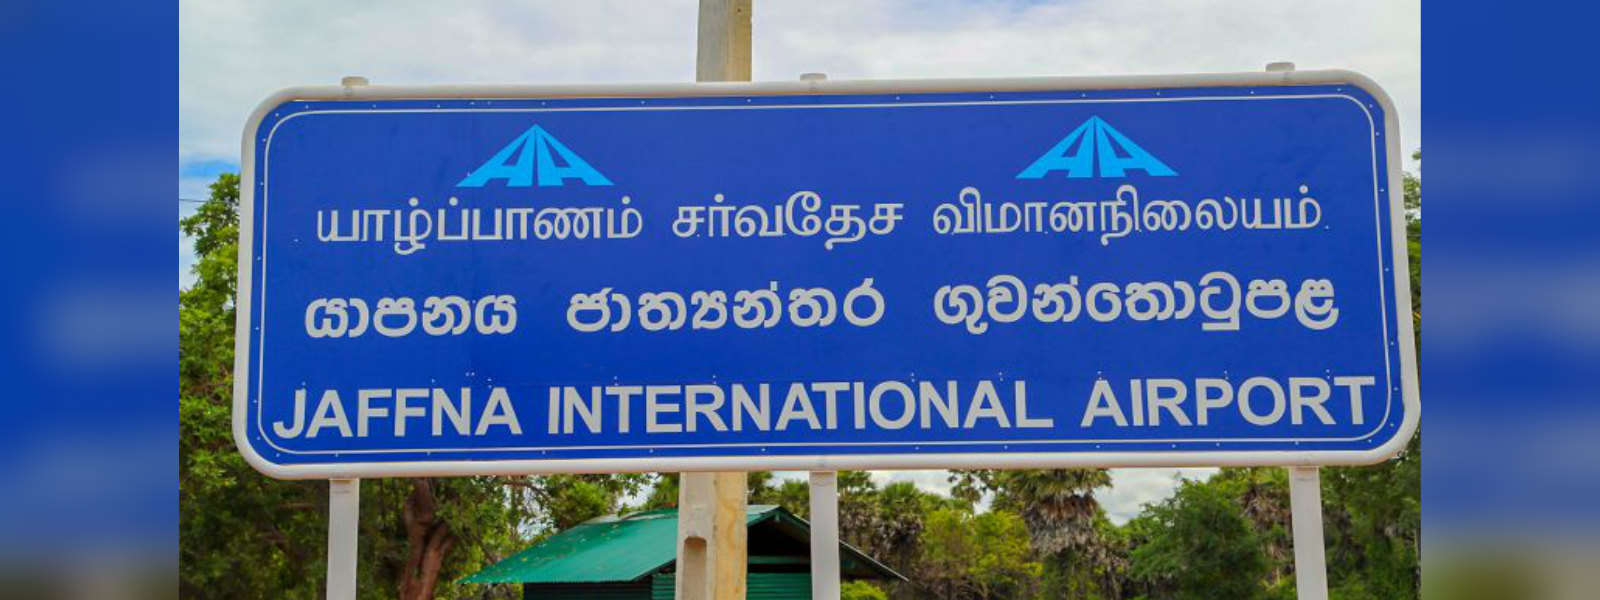 Jaffna International Airport declared open